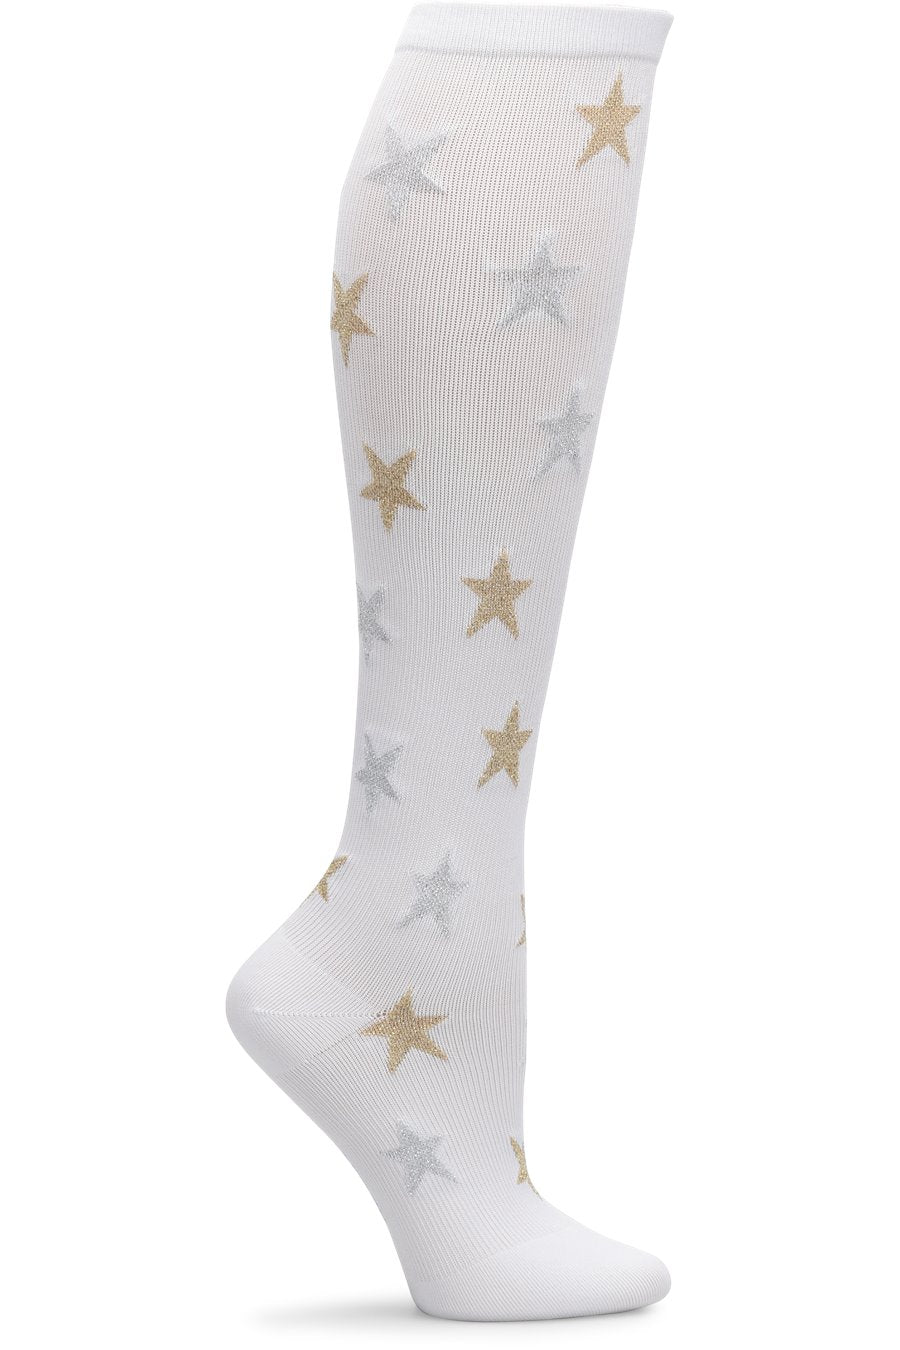 Compression Socks White Sparkle Star